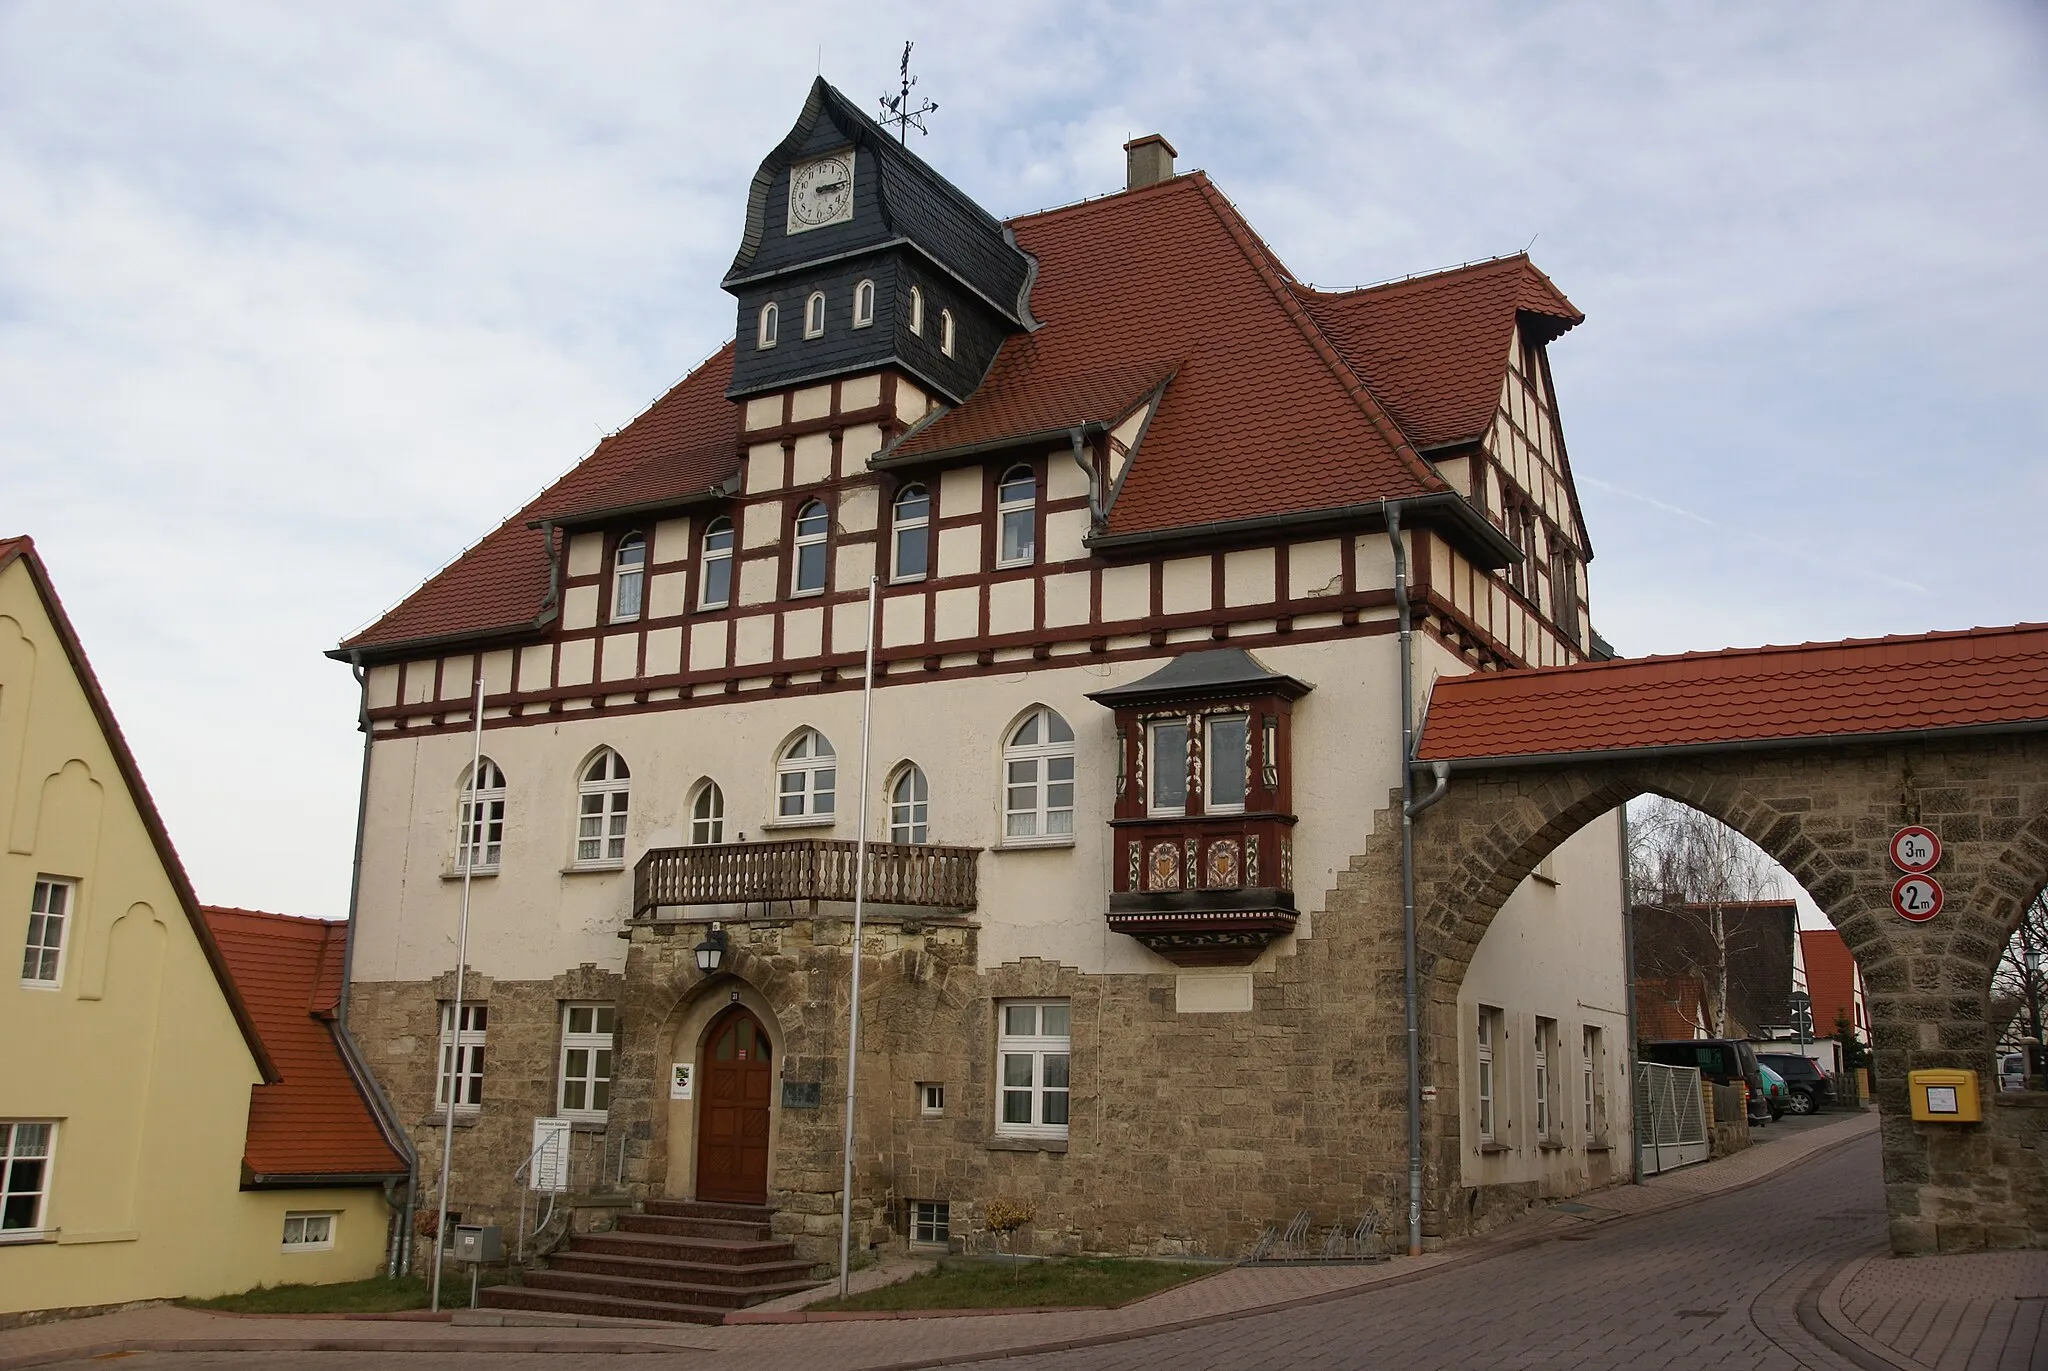 Image of Salzmünde